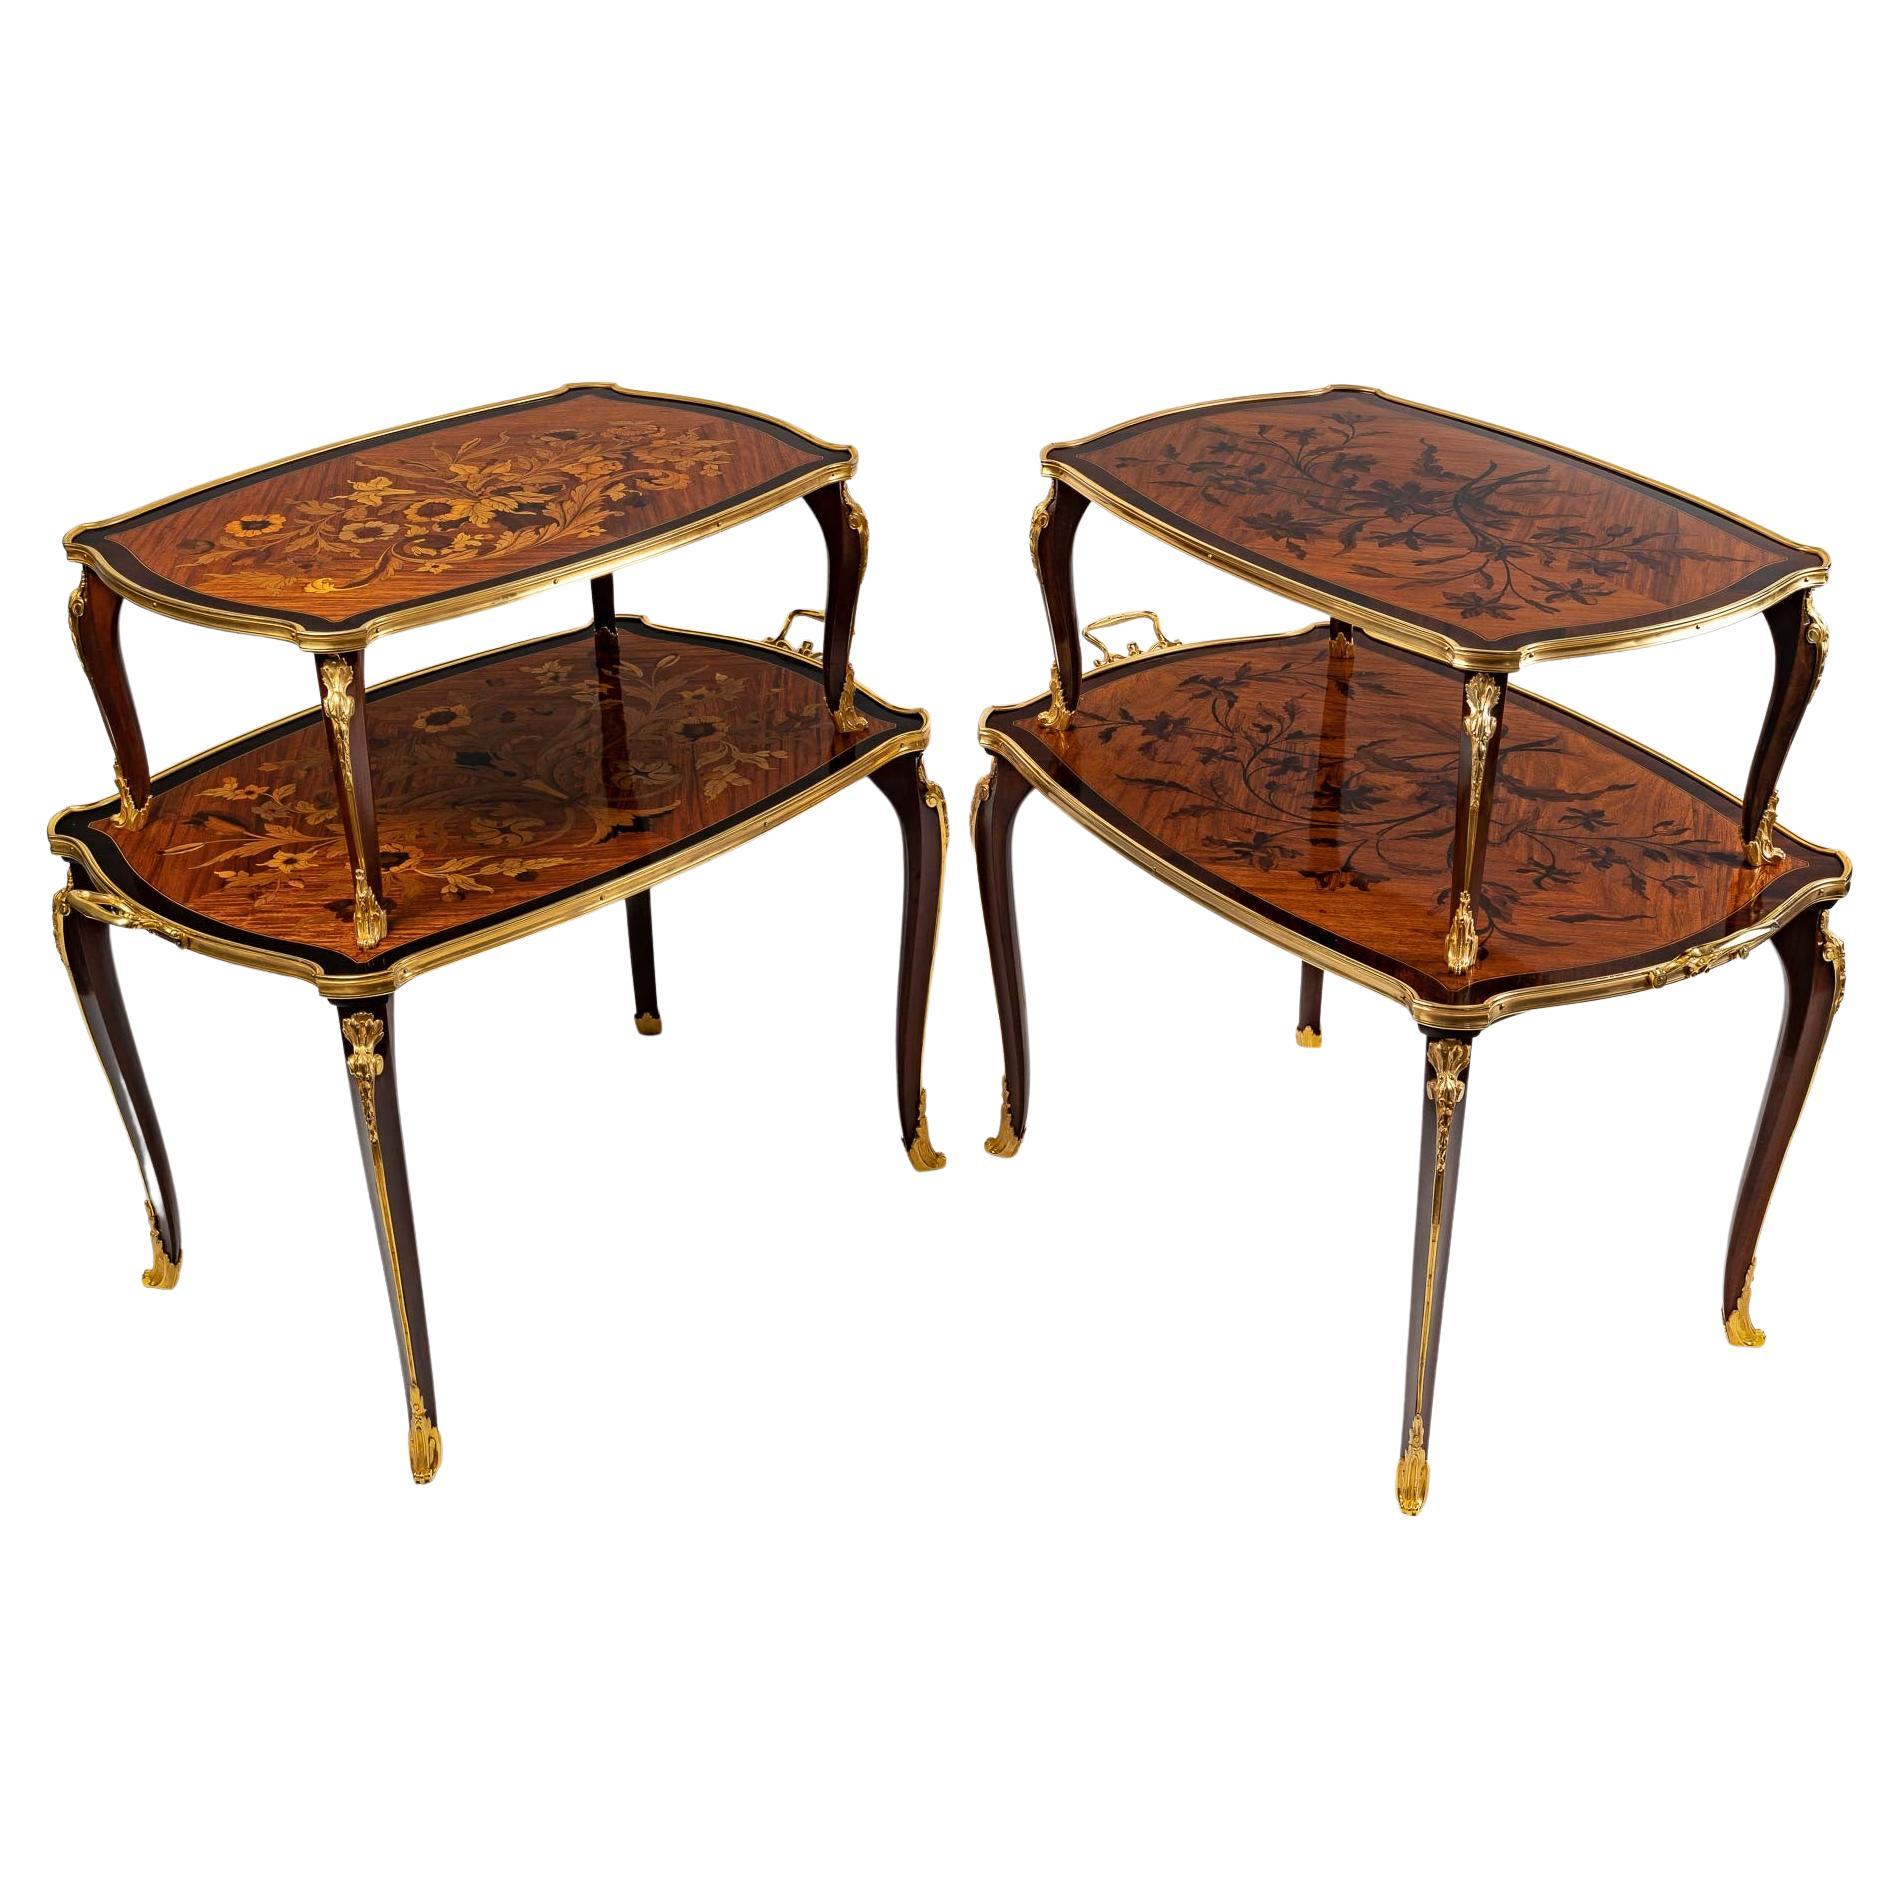 Pair of 19th Century Tea Tables, Napoleon III Period